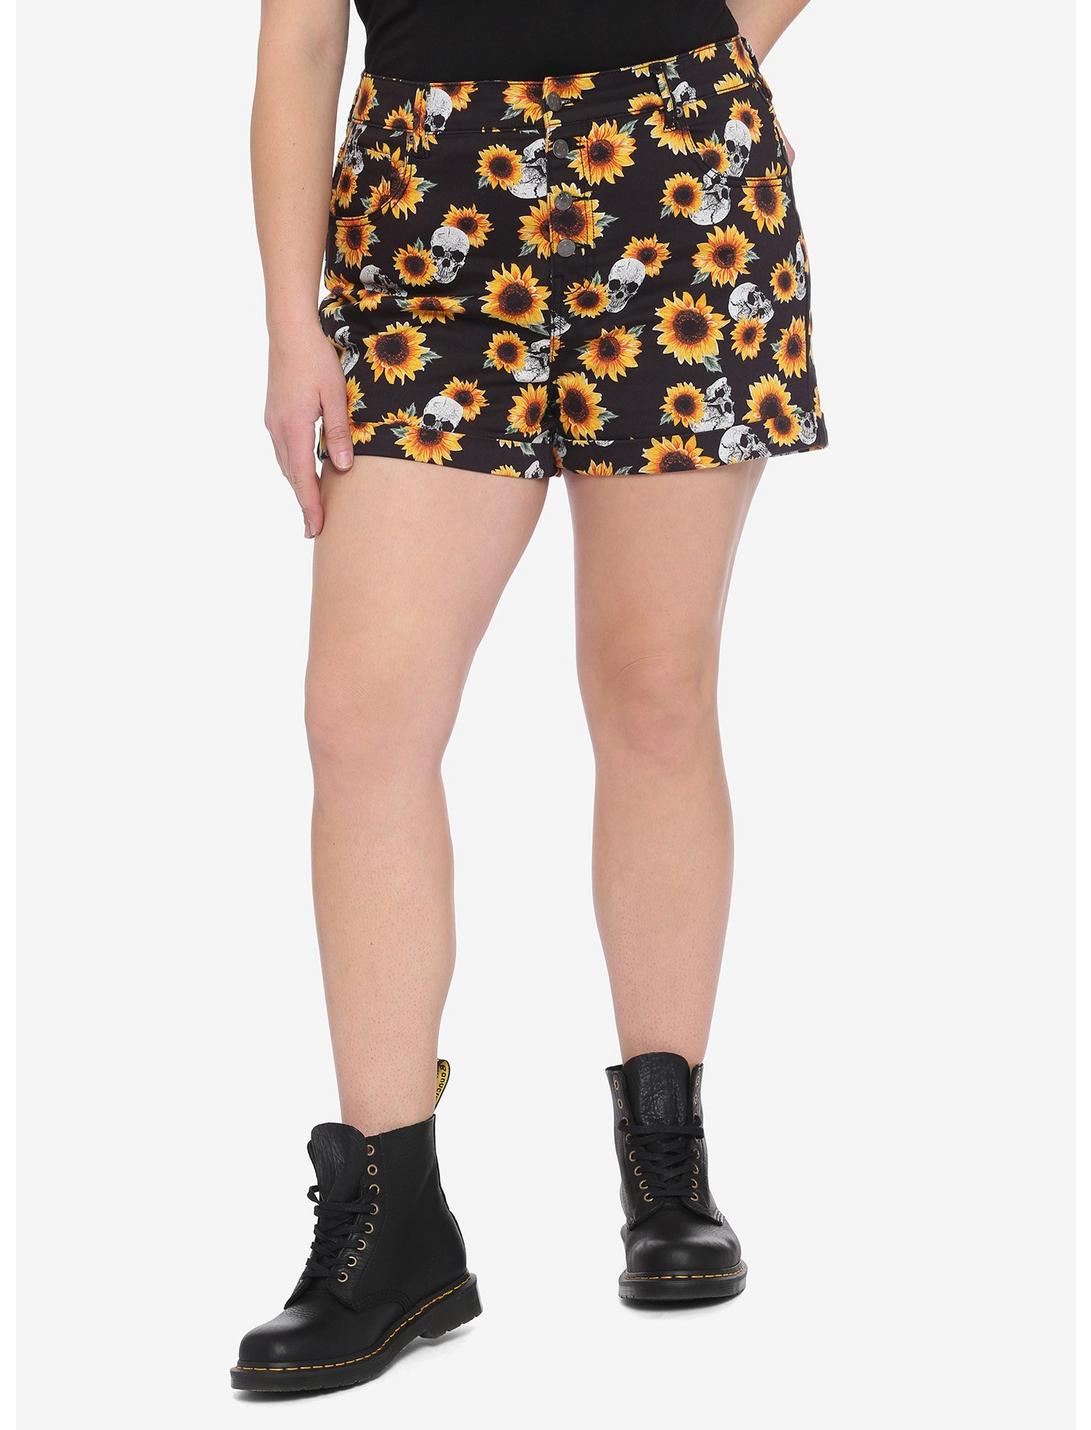 HT Denim Sunflowers & Skulls Ultra Hi-Rise Button-Front Shorts Plus Size, BLACK, hi-res